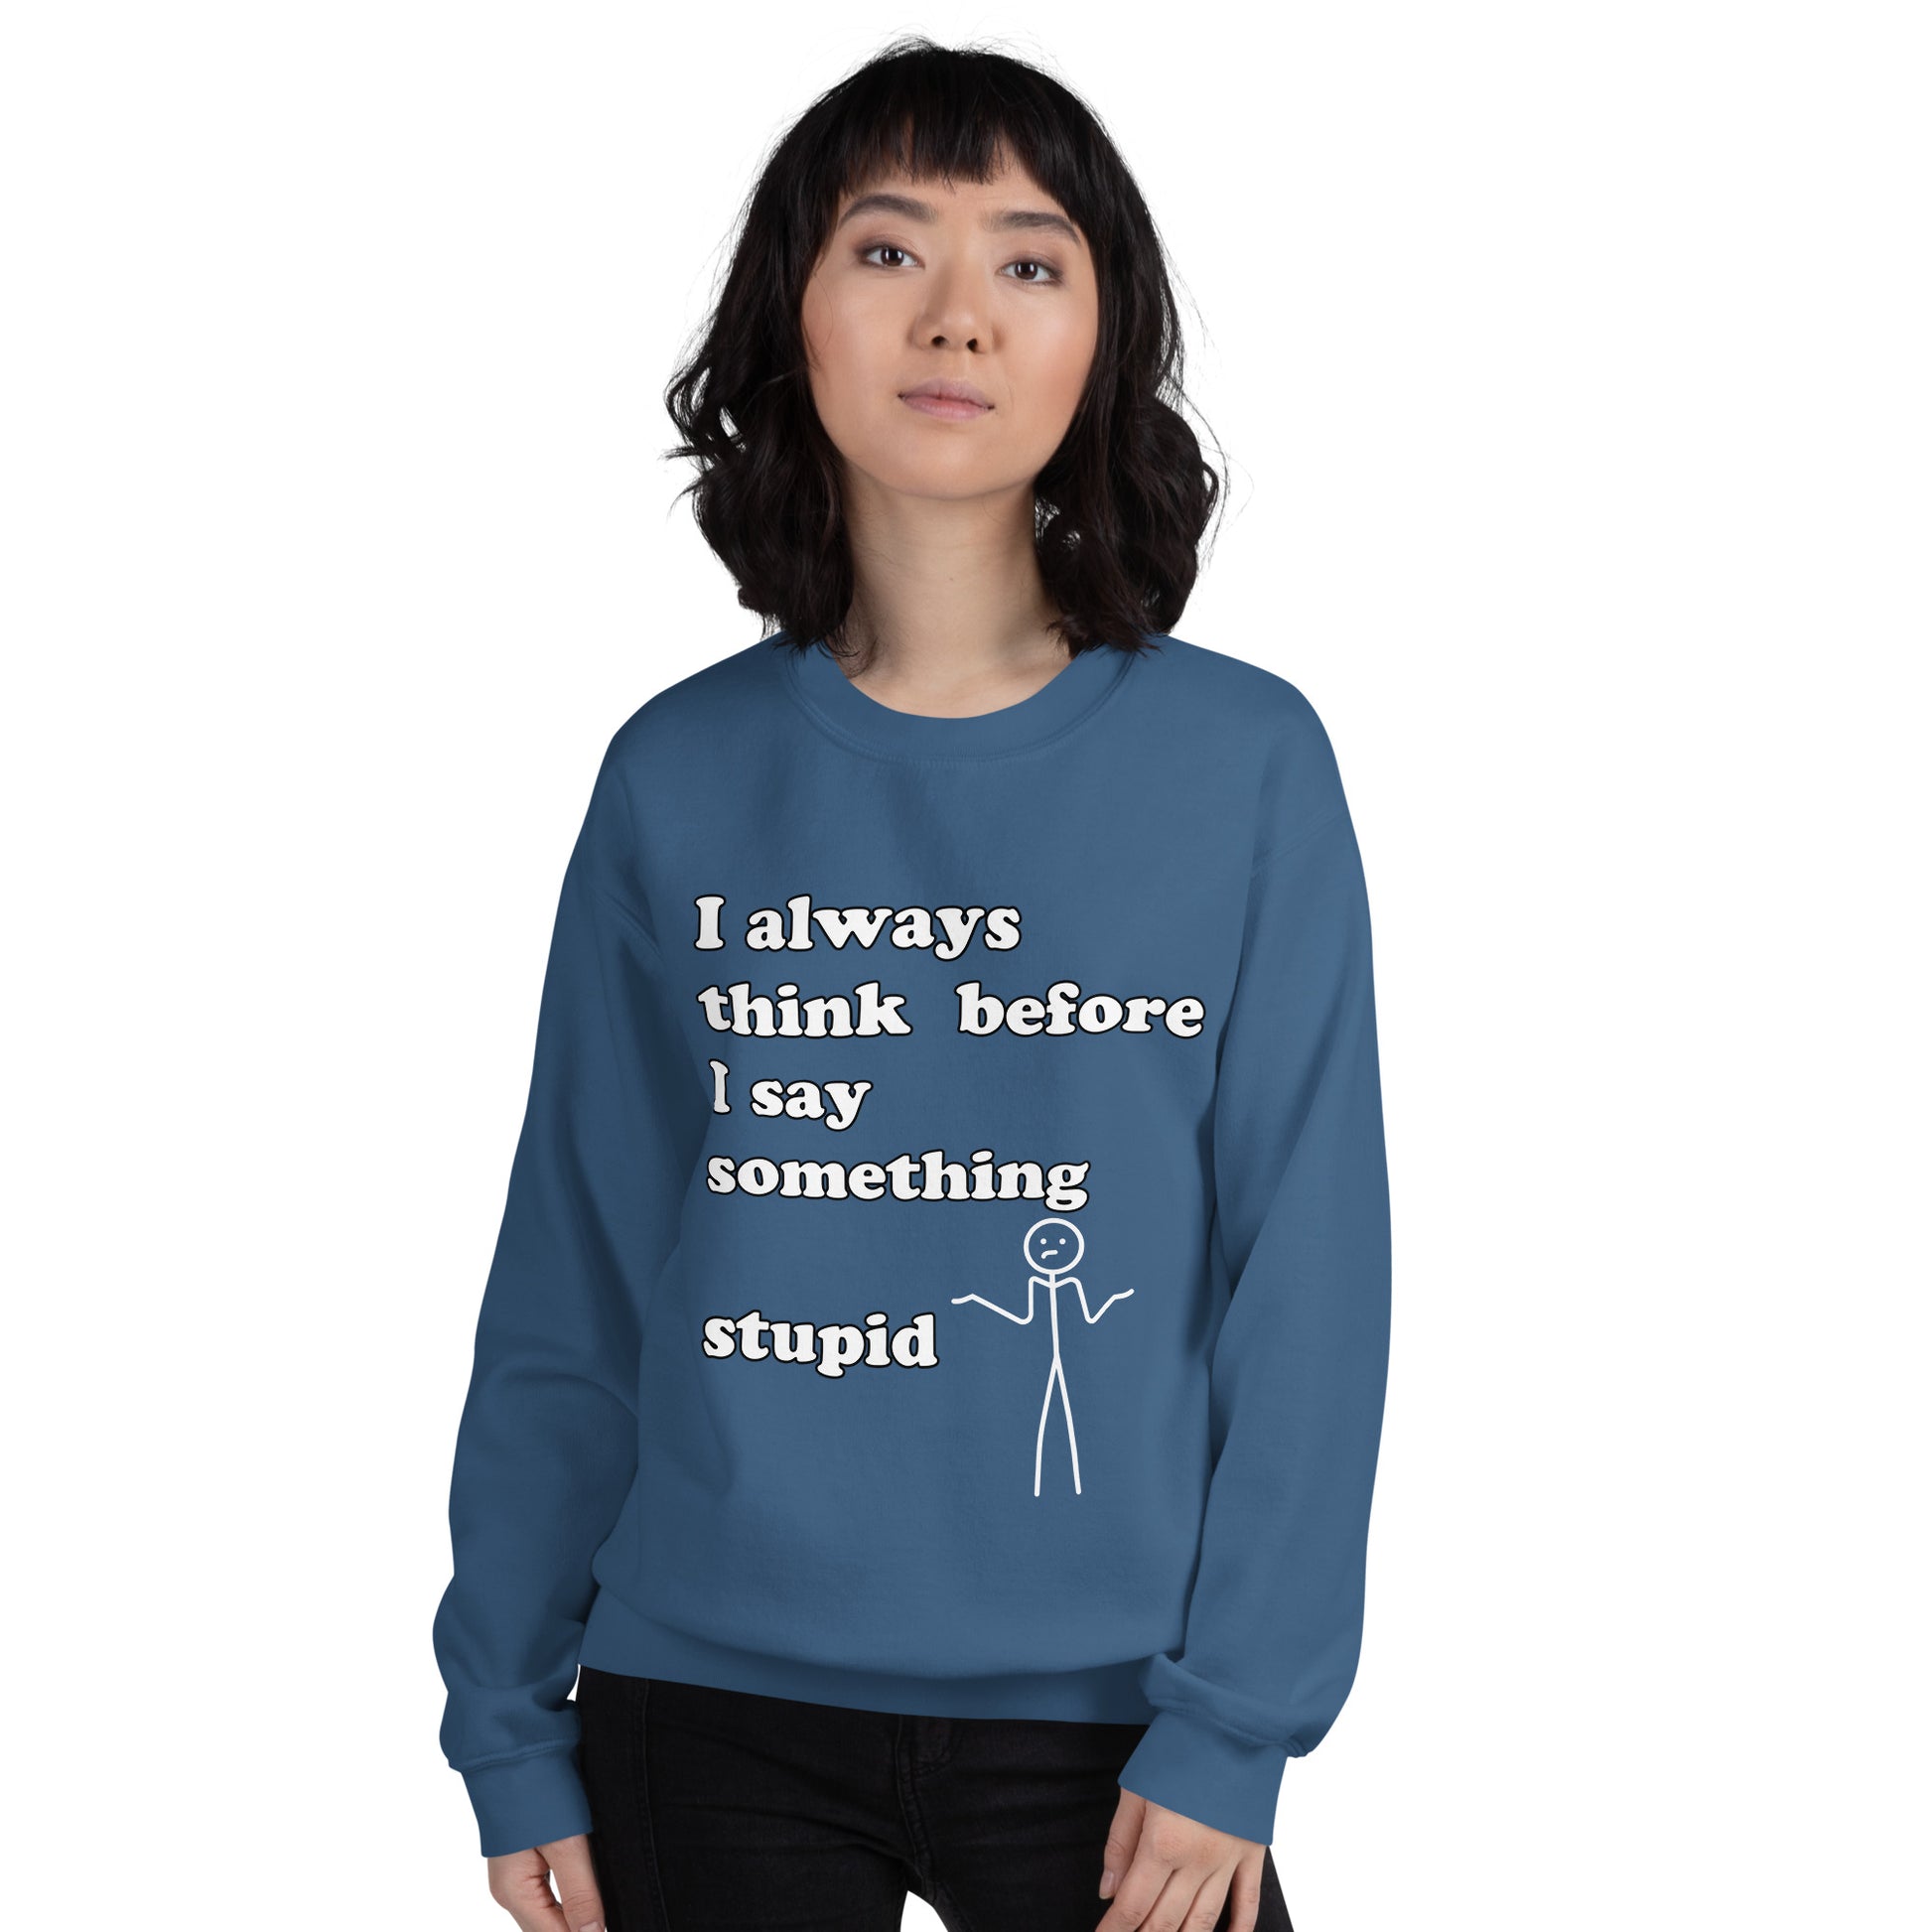 Woman with indigo blue sweatshirt with text "I always think before I say something stupid"